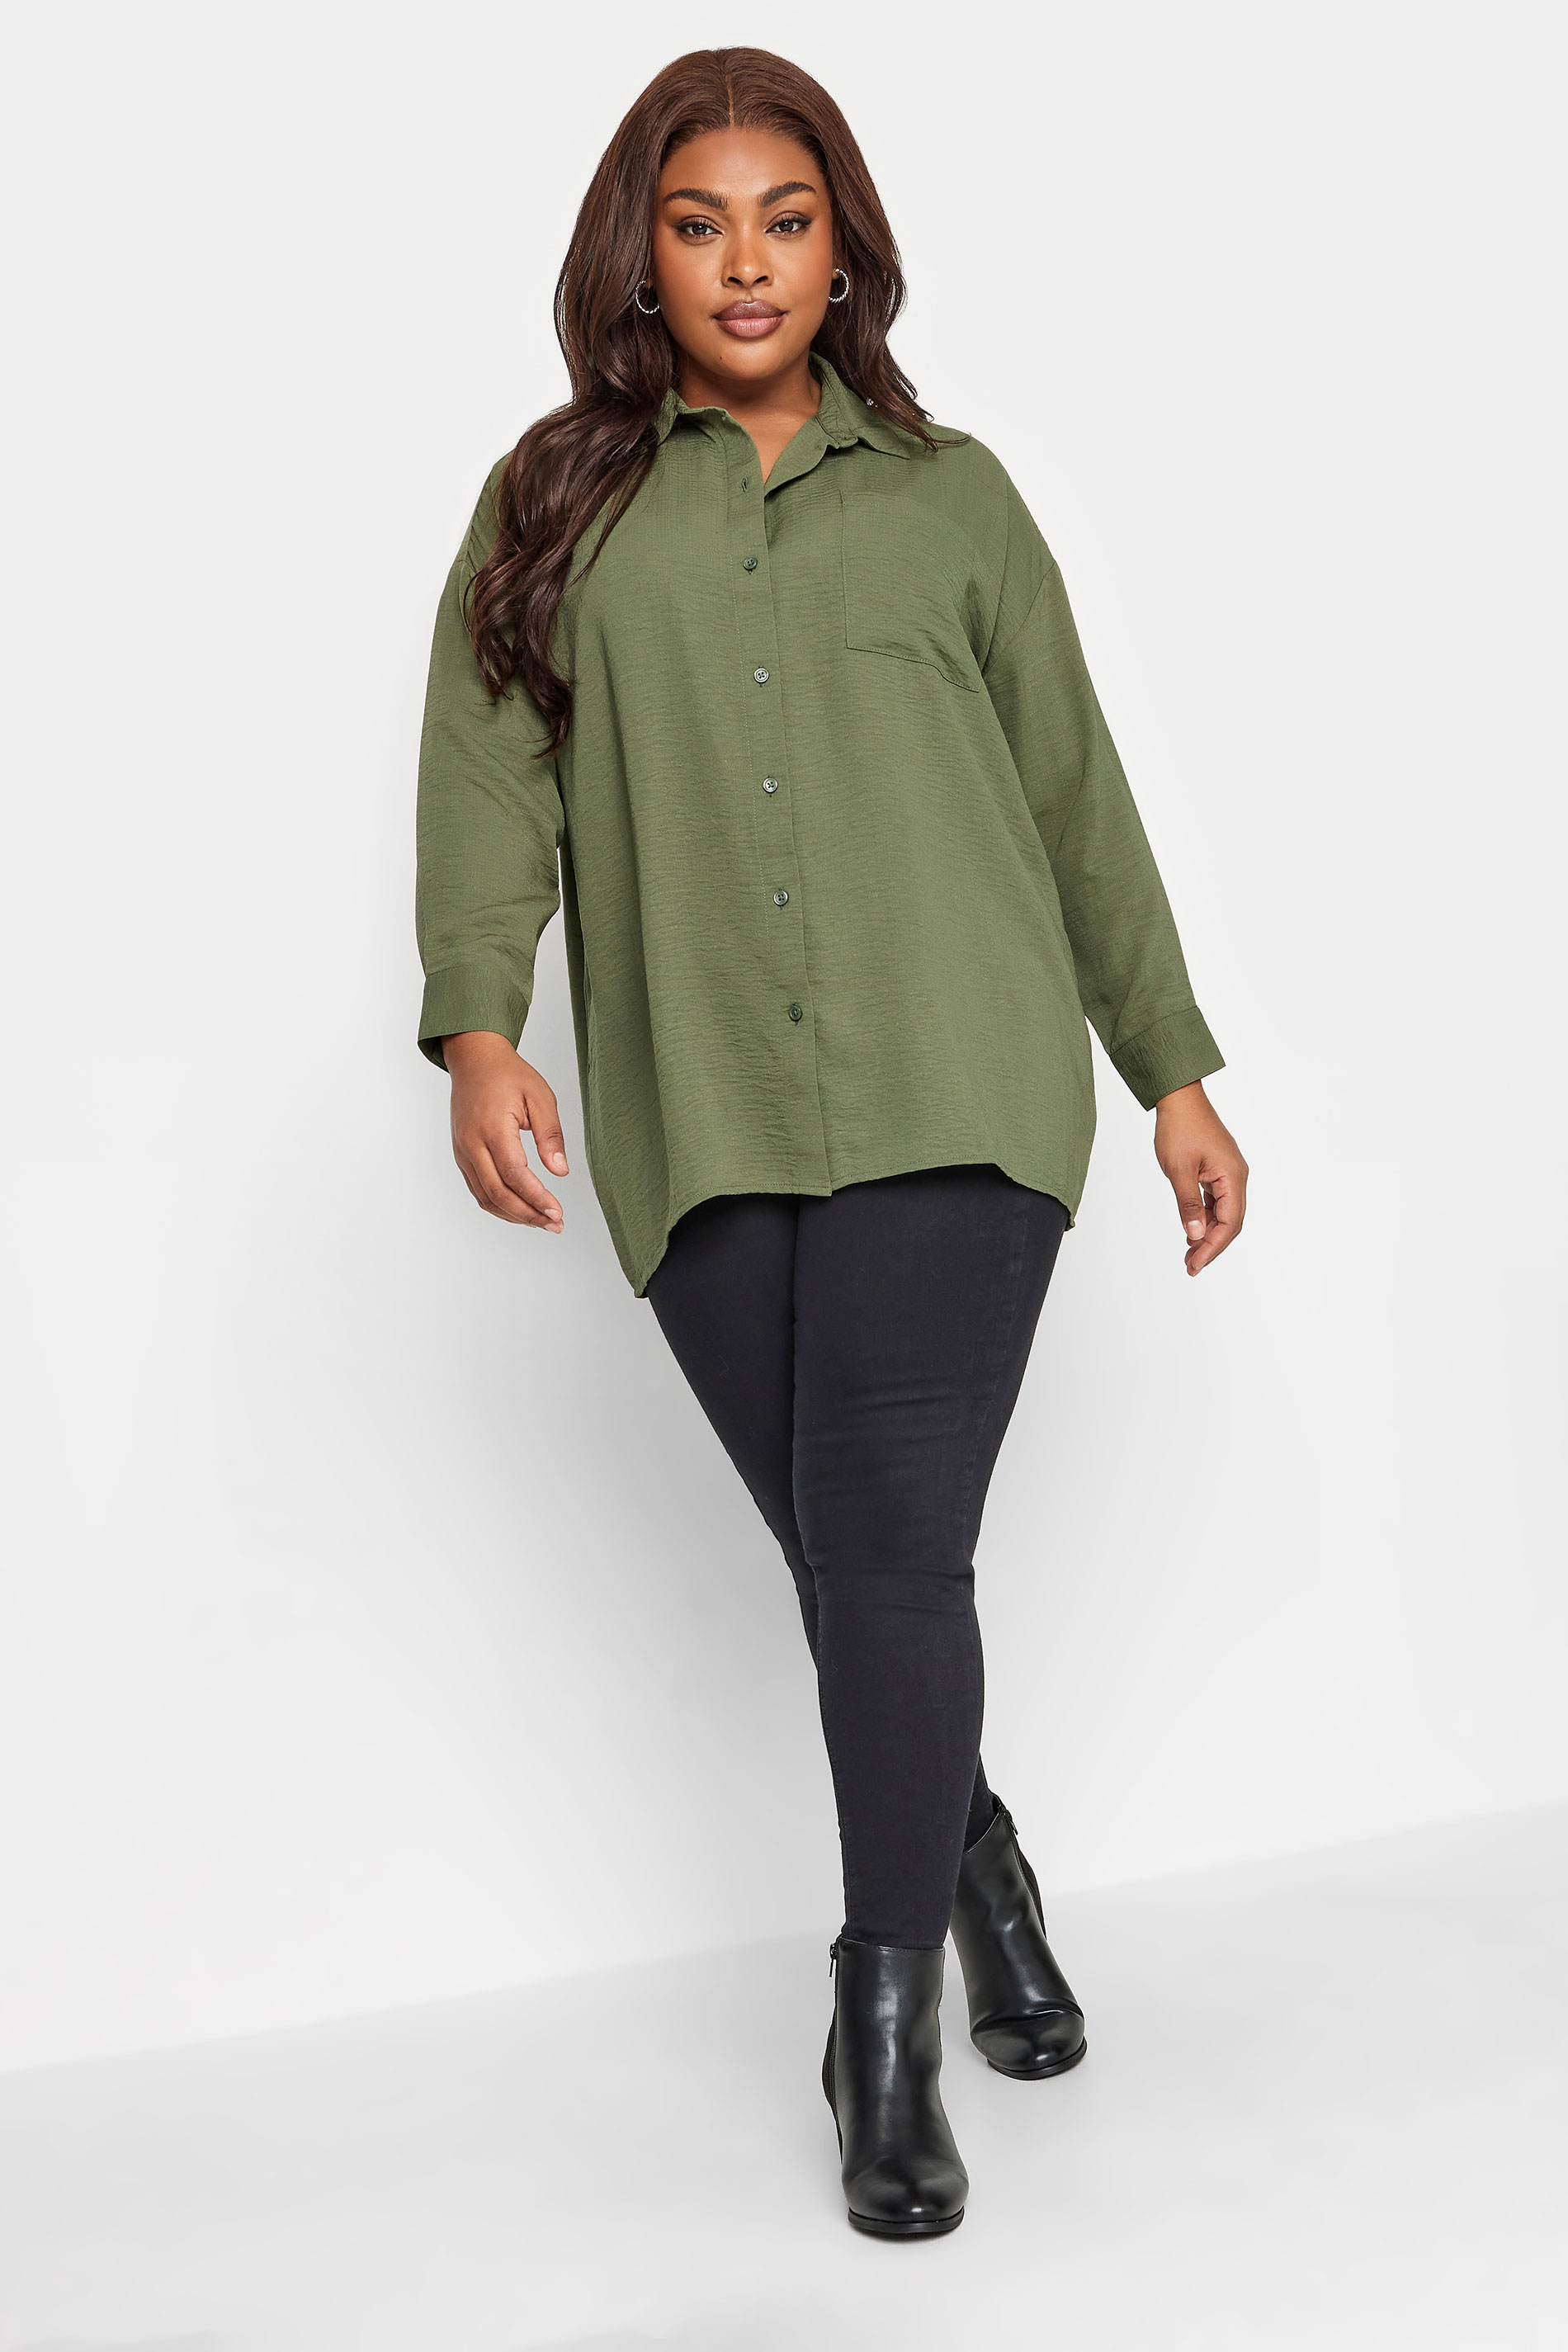 YOURS Curve Plus Size Khaki Green Textured Boyfriend Shirt | Yours Clothing 3